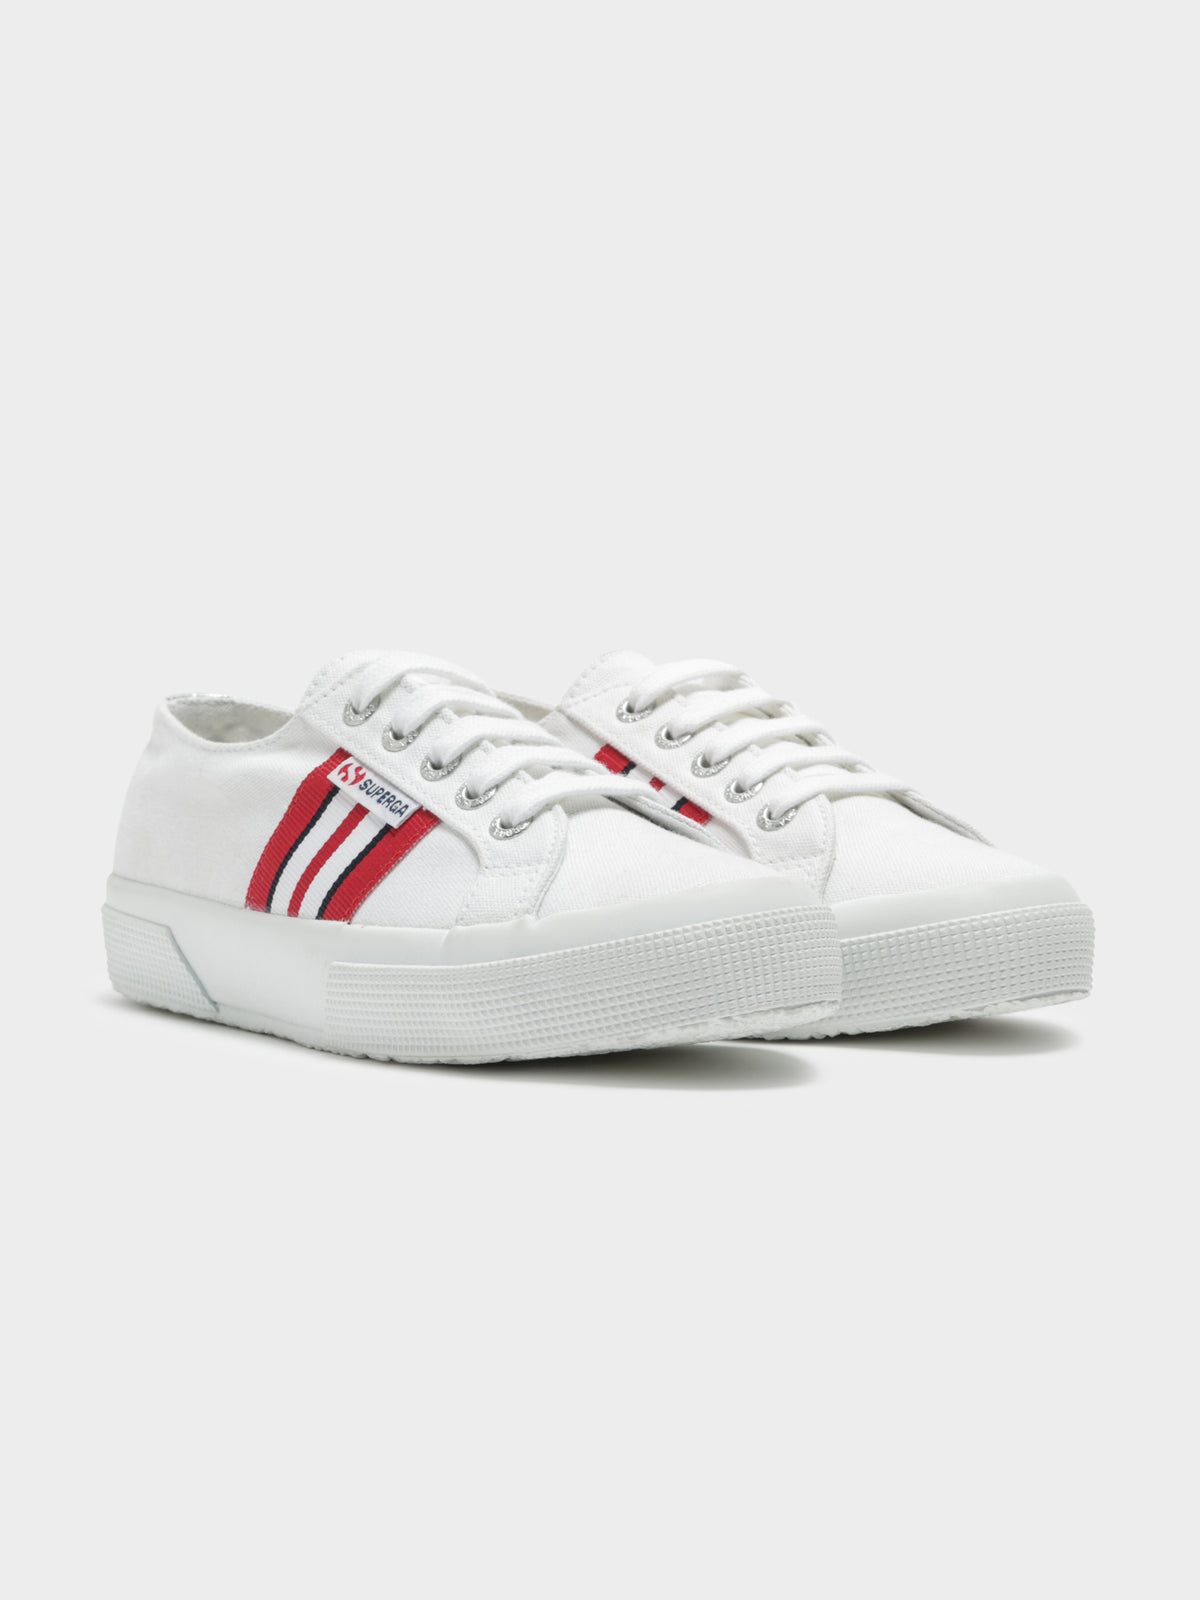 Womens 2750 Cotu Cotmetf Sneakers in White, Red &amp; Navy